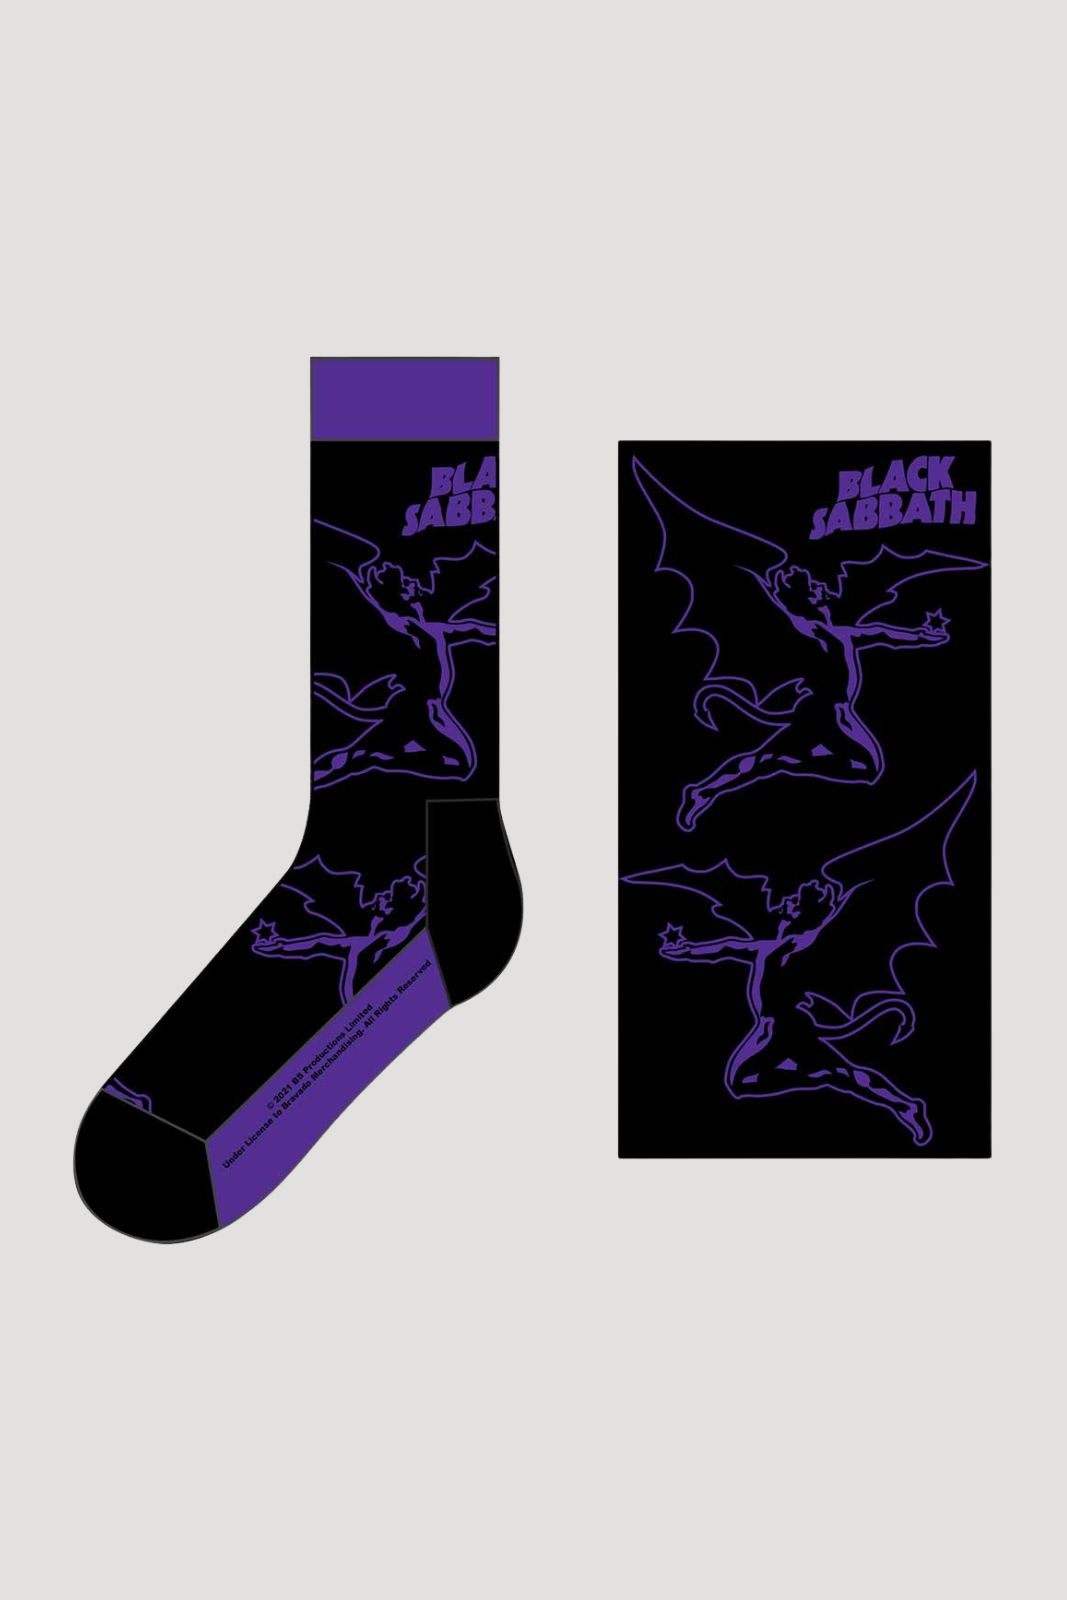 Black Sabbath Socks Black and Purple Demon